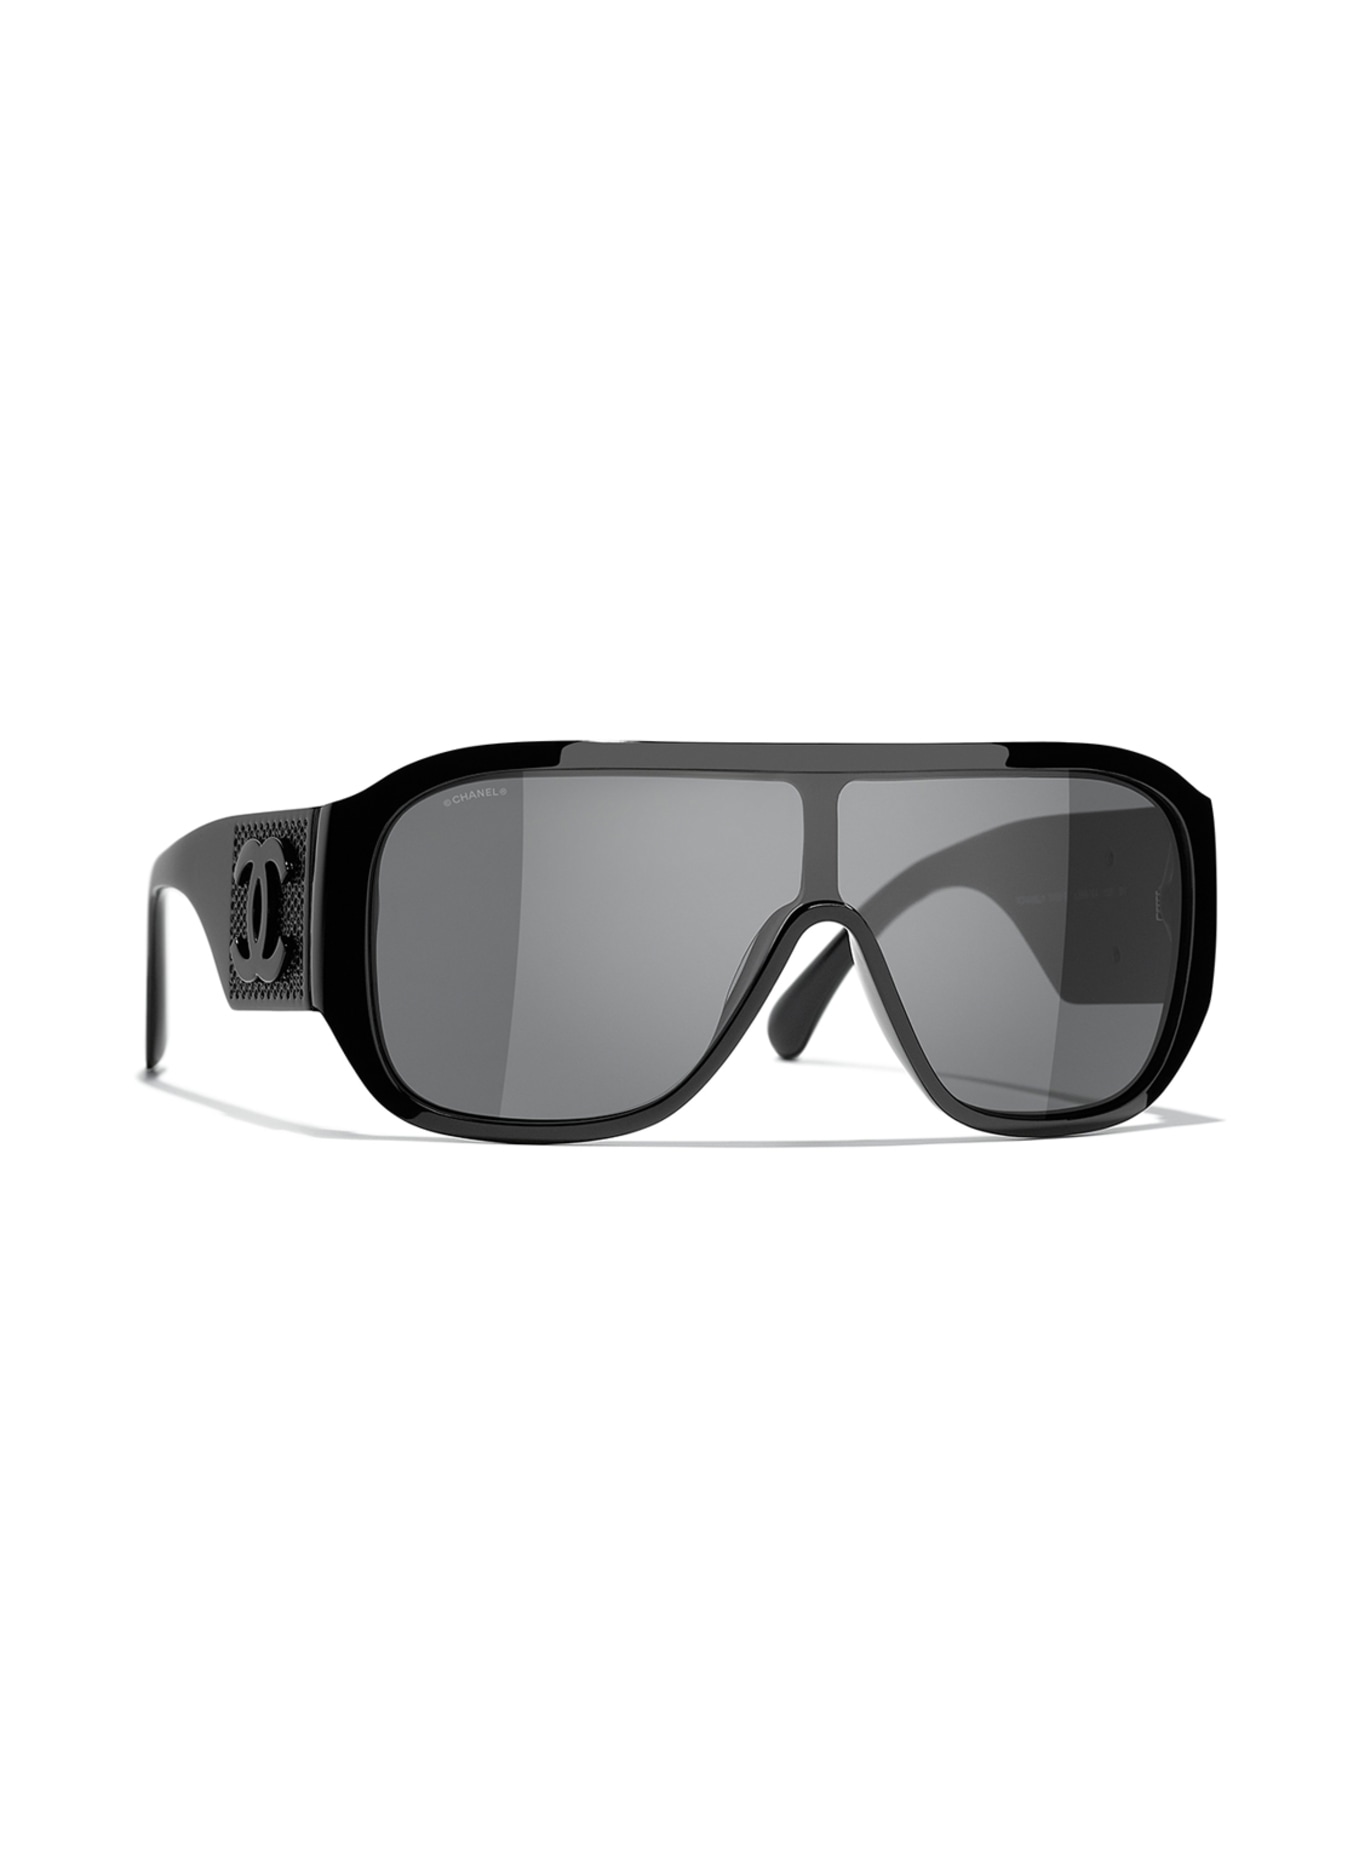 CHANEL Wraparound sunglasses in c888s4  black dark gray  Breuninger